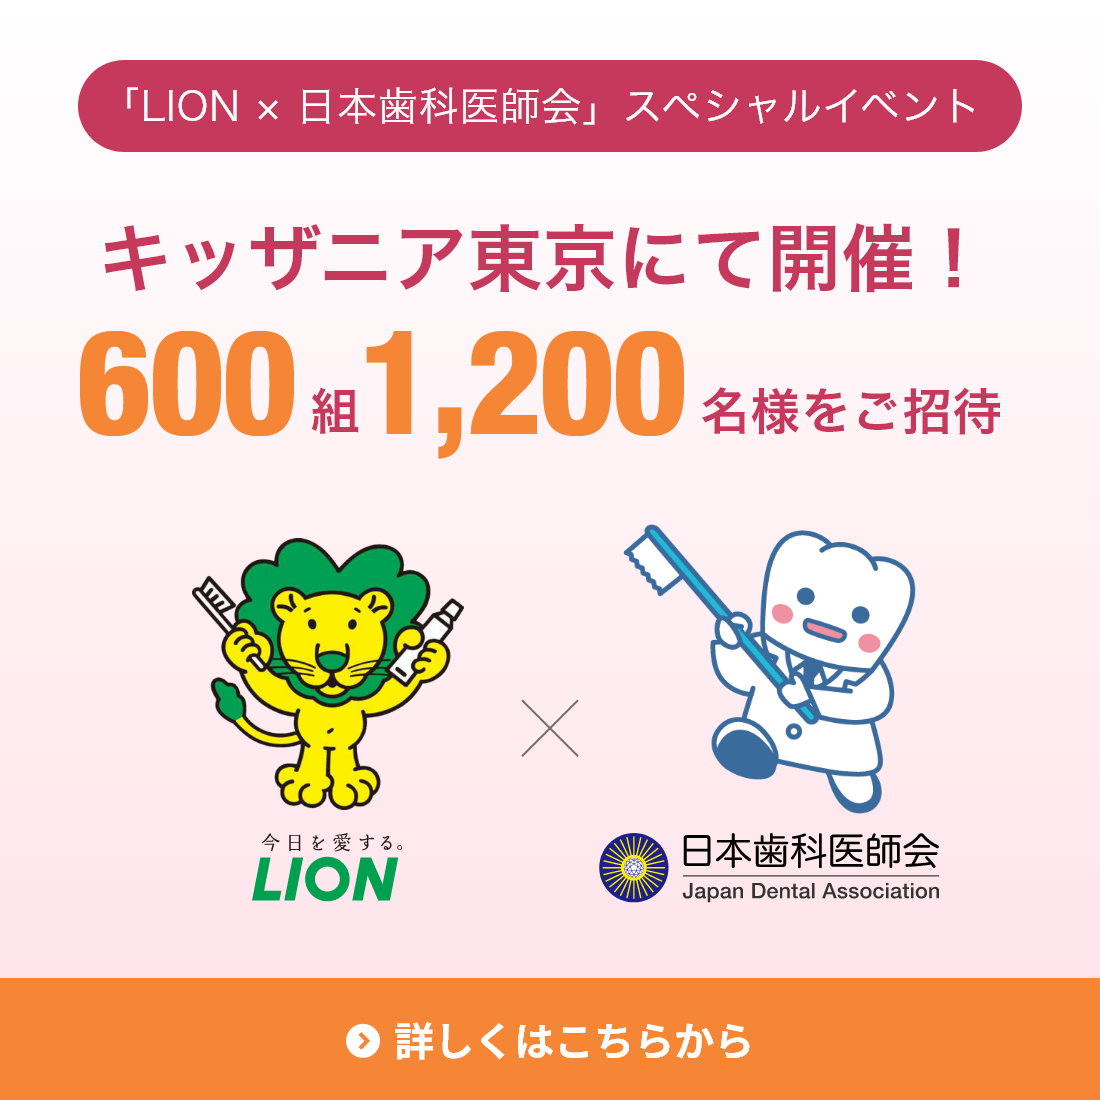 「LION×日本歯科医師会」スペシャルイベント